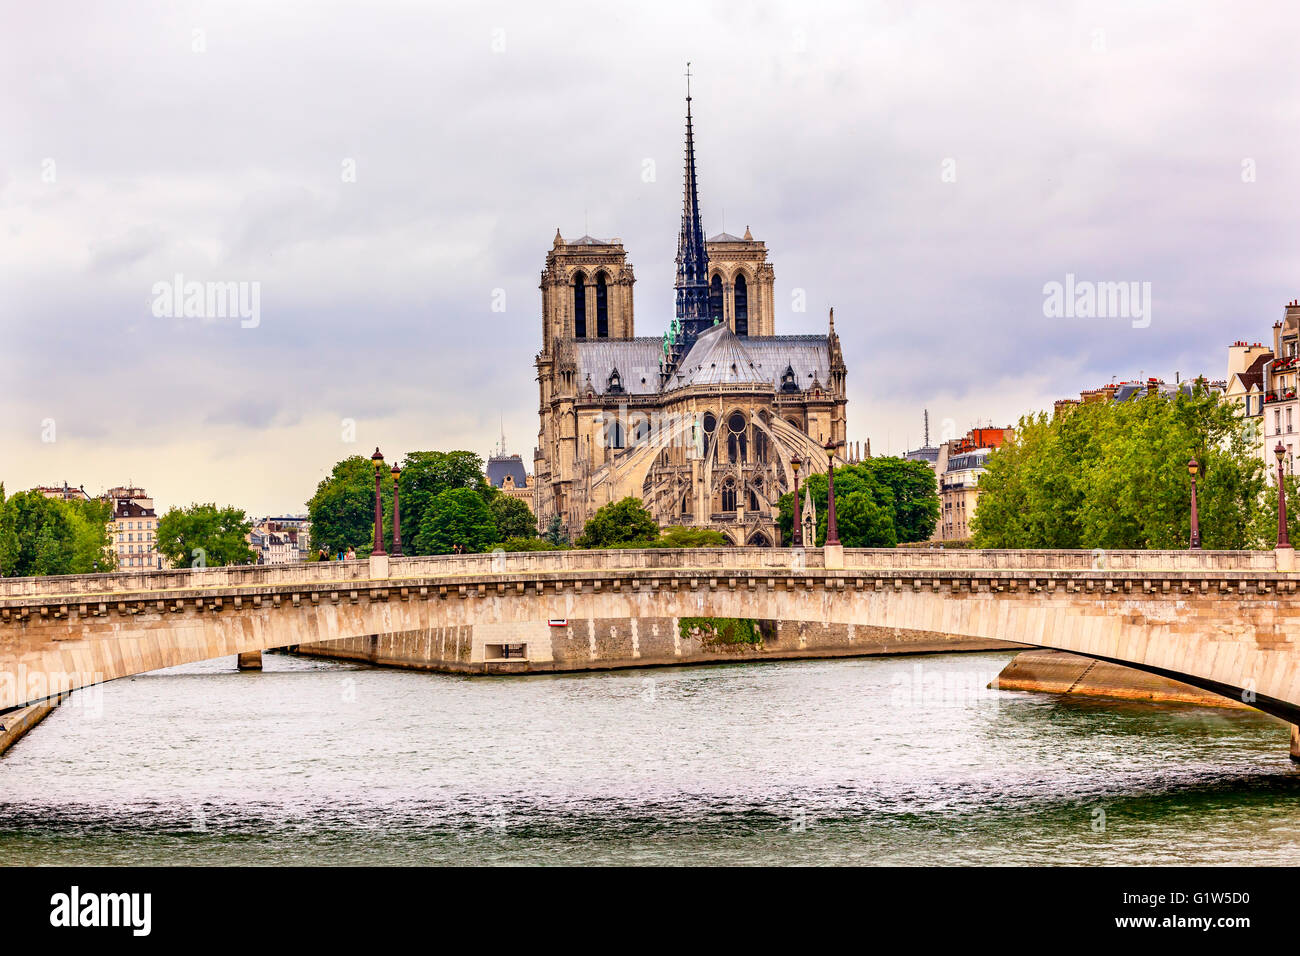 Fliegende Strebepfeiler Türme Türme Seine Flussbrücke bewölktem Himmel Notre Dame Kathedrale Paris Frankreich. Stockfoto